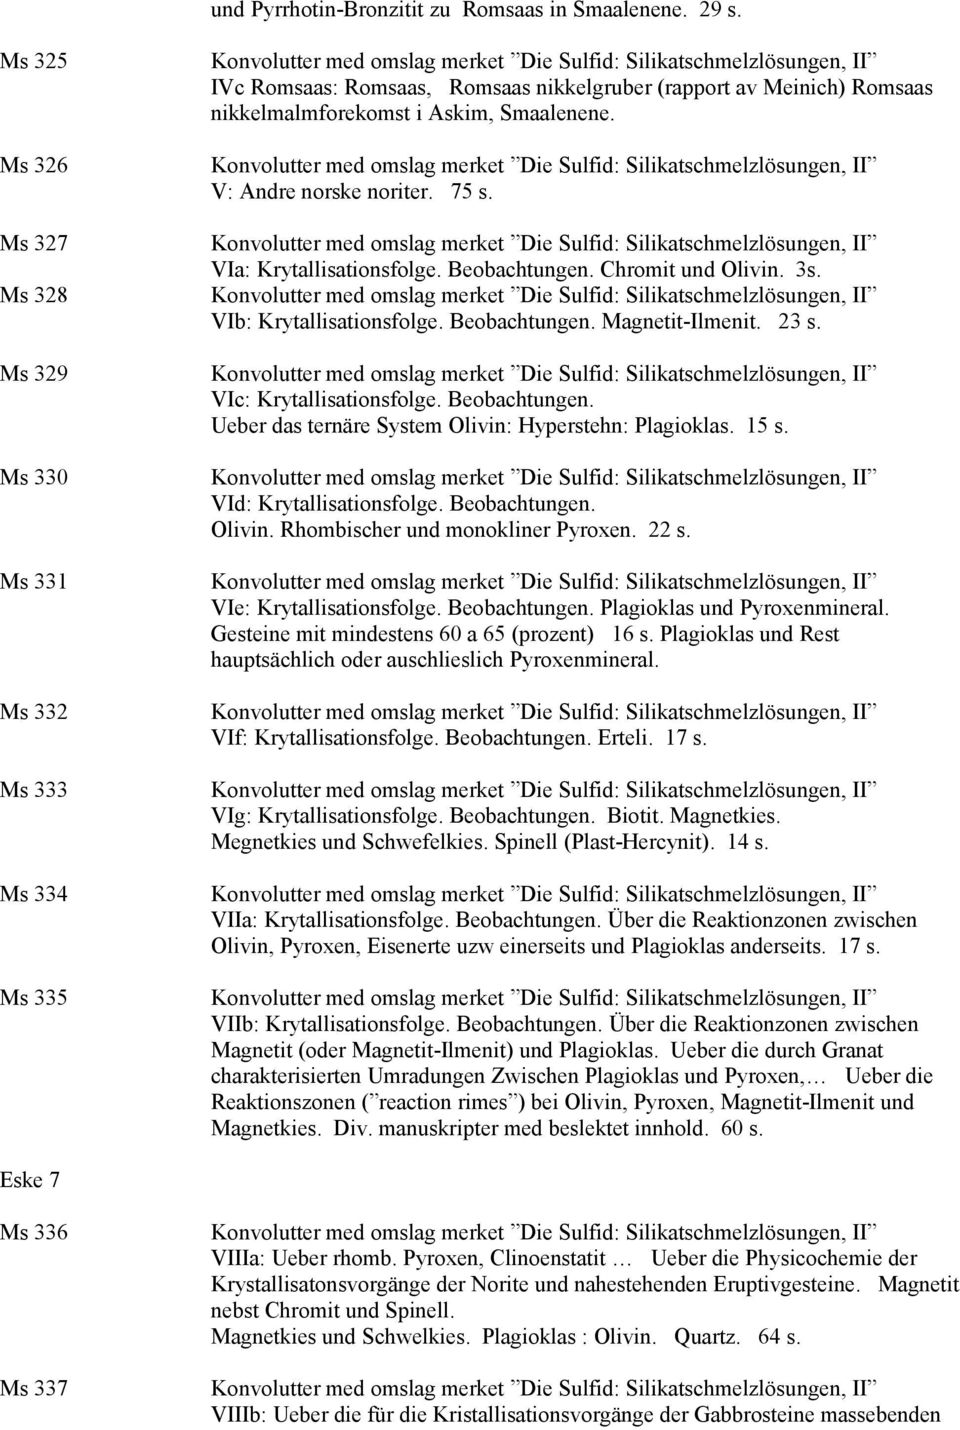 V: Andre norske noriter. 75 s. VIa: Krytallisationsfolge. Beobachtungen. Chromit und Olivin. 3s. VIb: Krytallisationsfolge. Beobachtungen. Magnetit-Ilmenit. 23 s. VIc: Krytallisationsfolge.